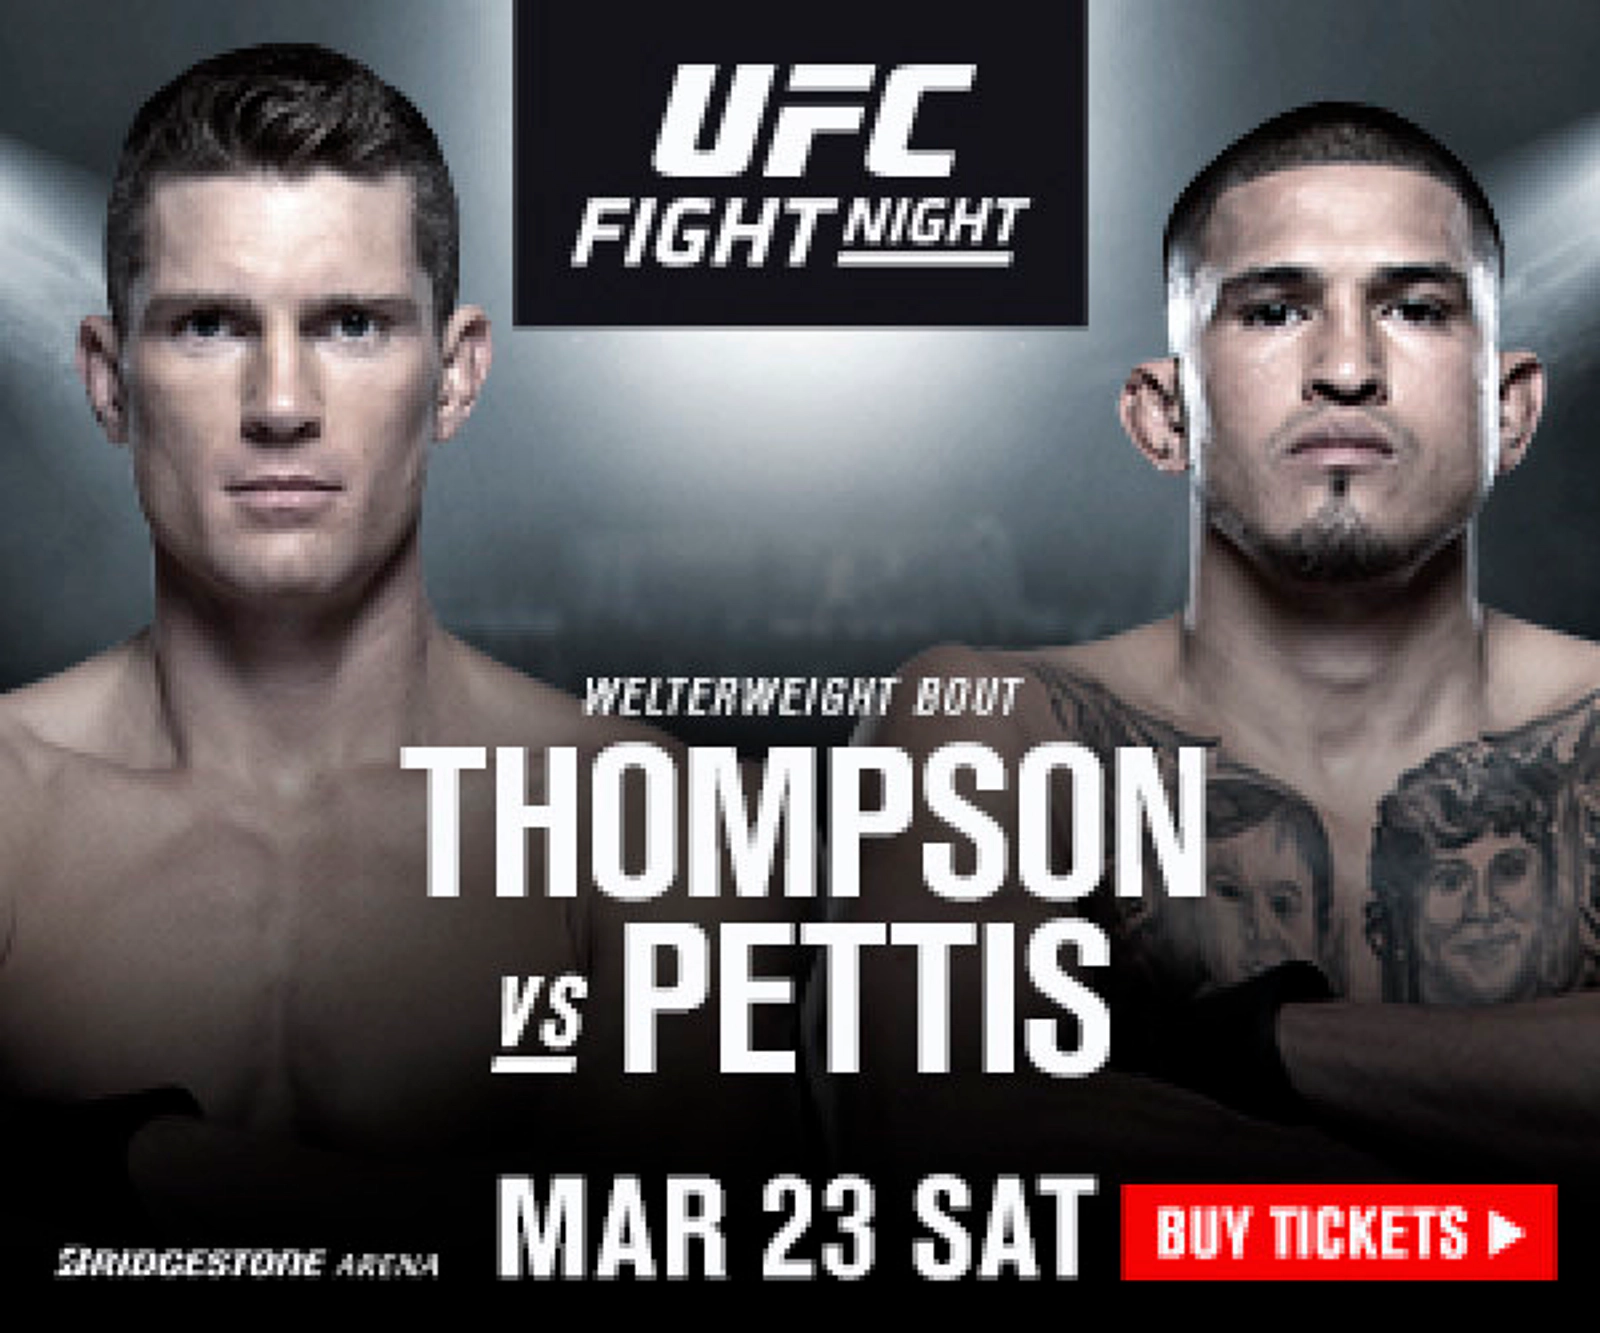   UFC Fight Night - Thumbnail Image